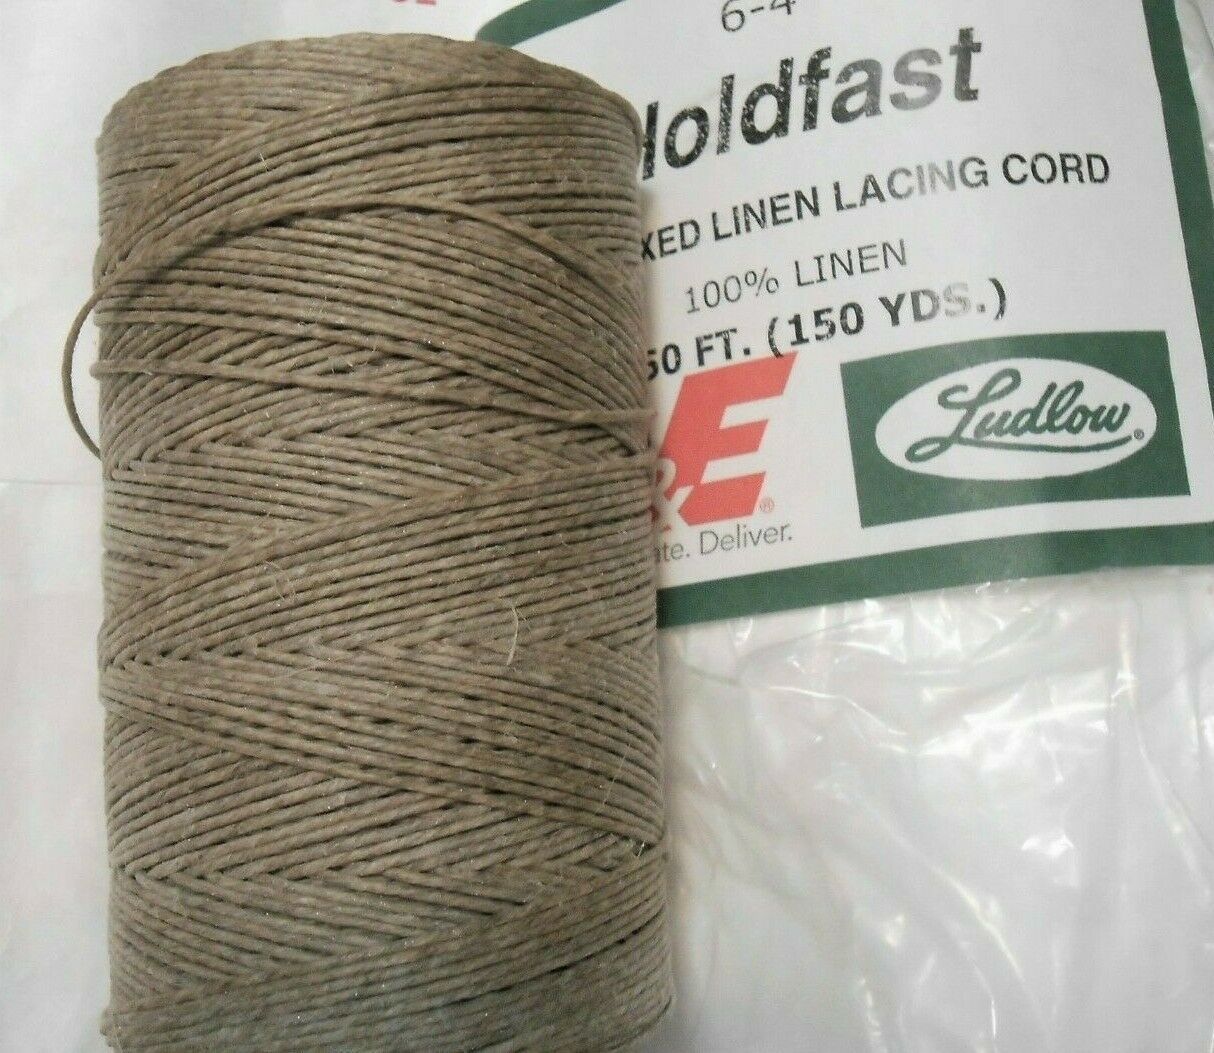 Waxed LINEN lacing cord thread 6-4 Holdfast rug braiding weaving twine 4-ply 4oz